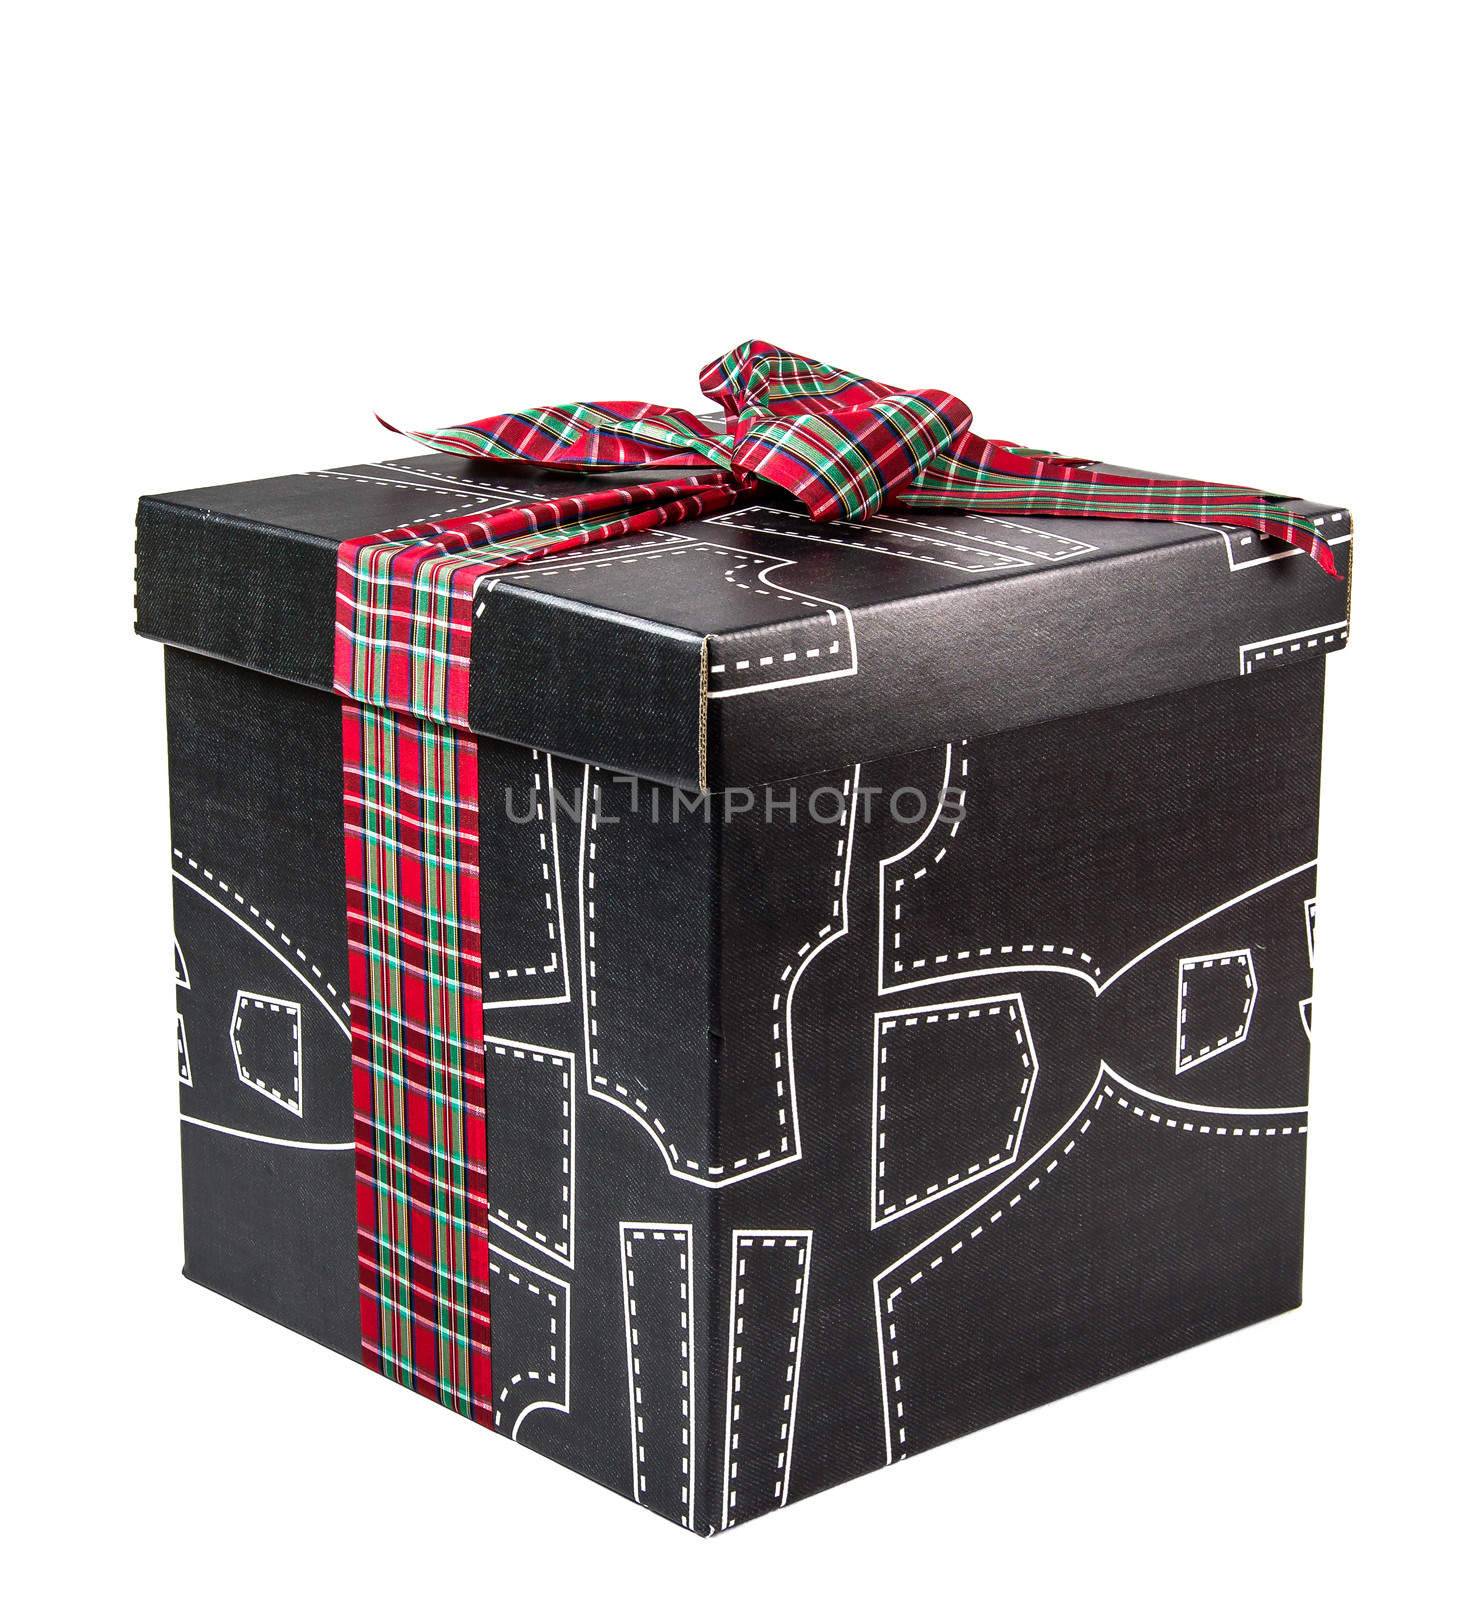 Gift box isolated on white background